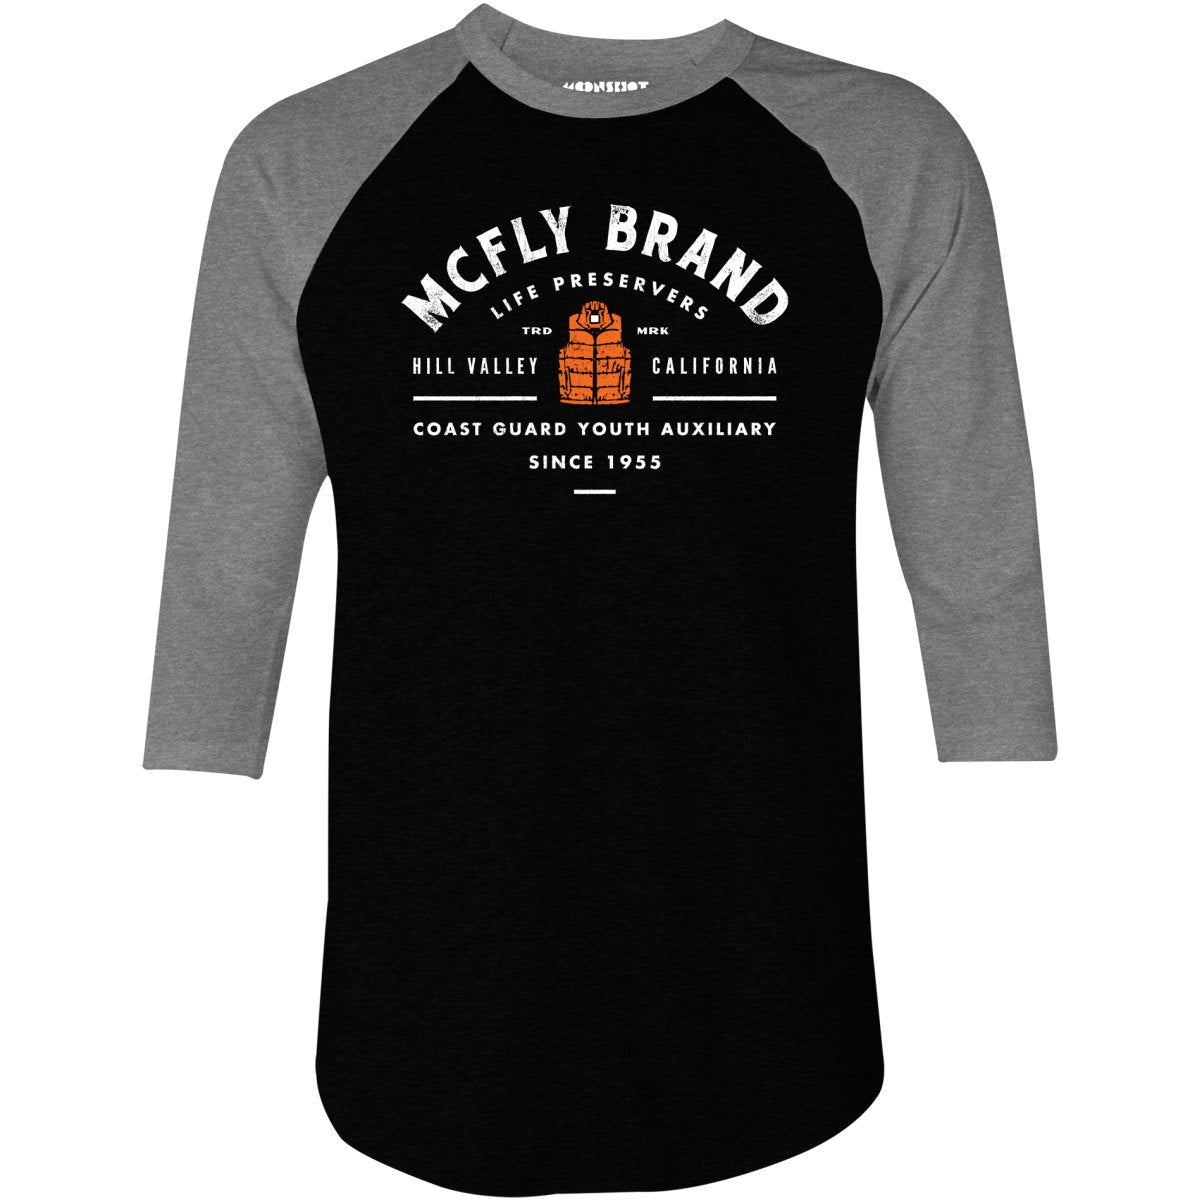 McFly Brand Life Preservers - 3/4 Sleeve Raglan T-Shirt